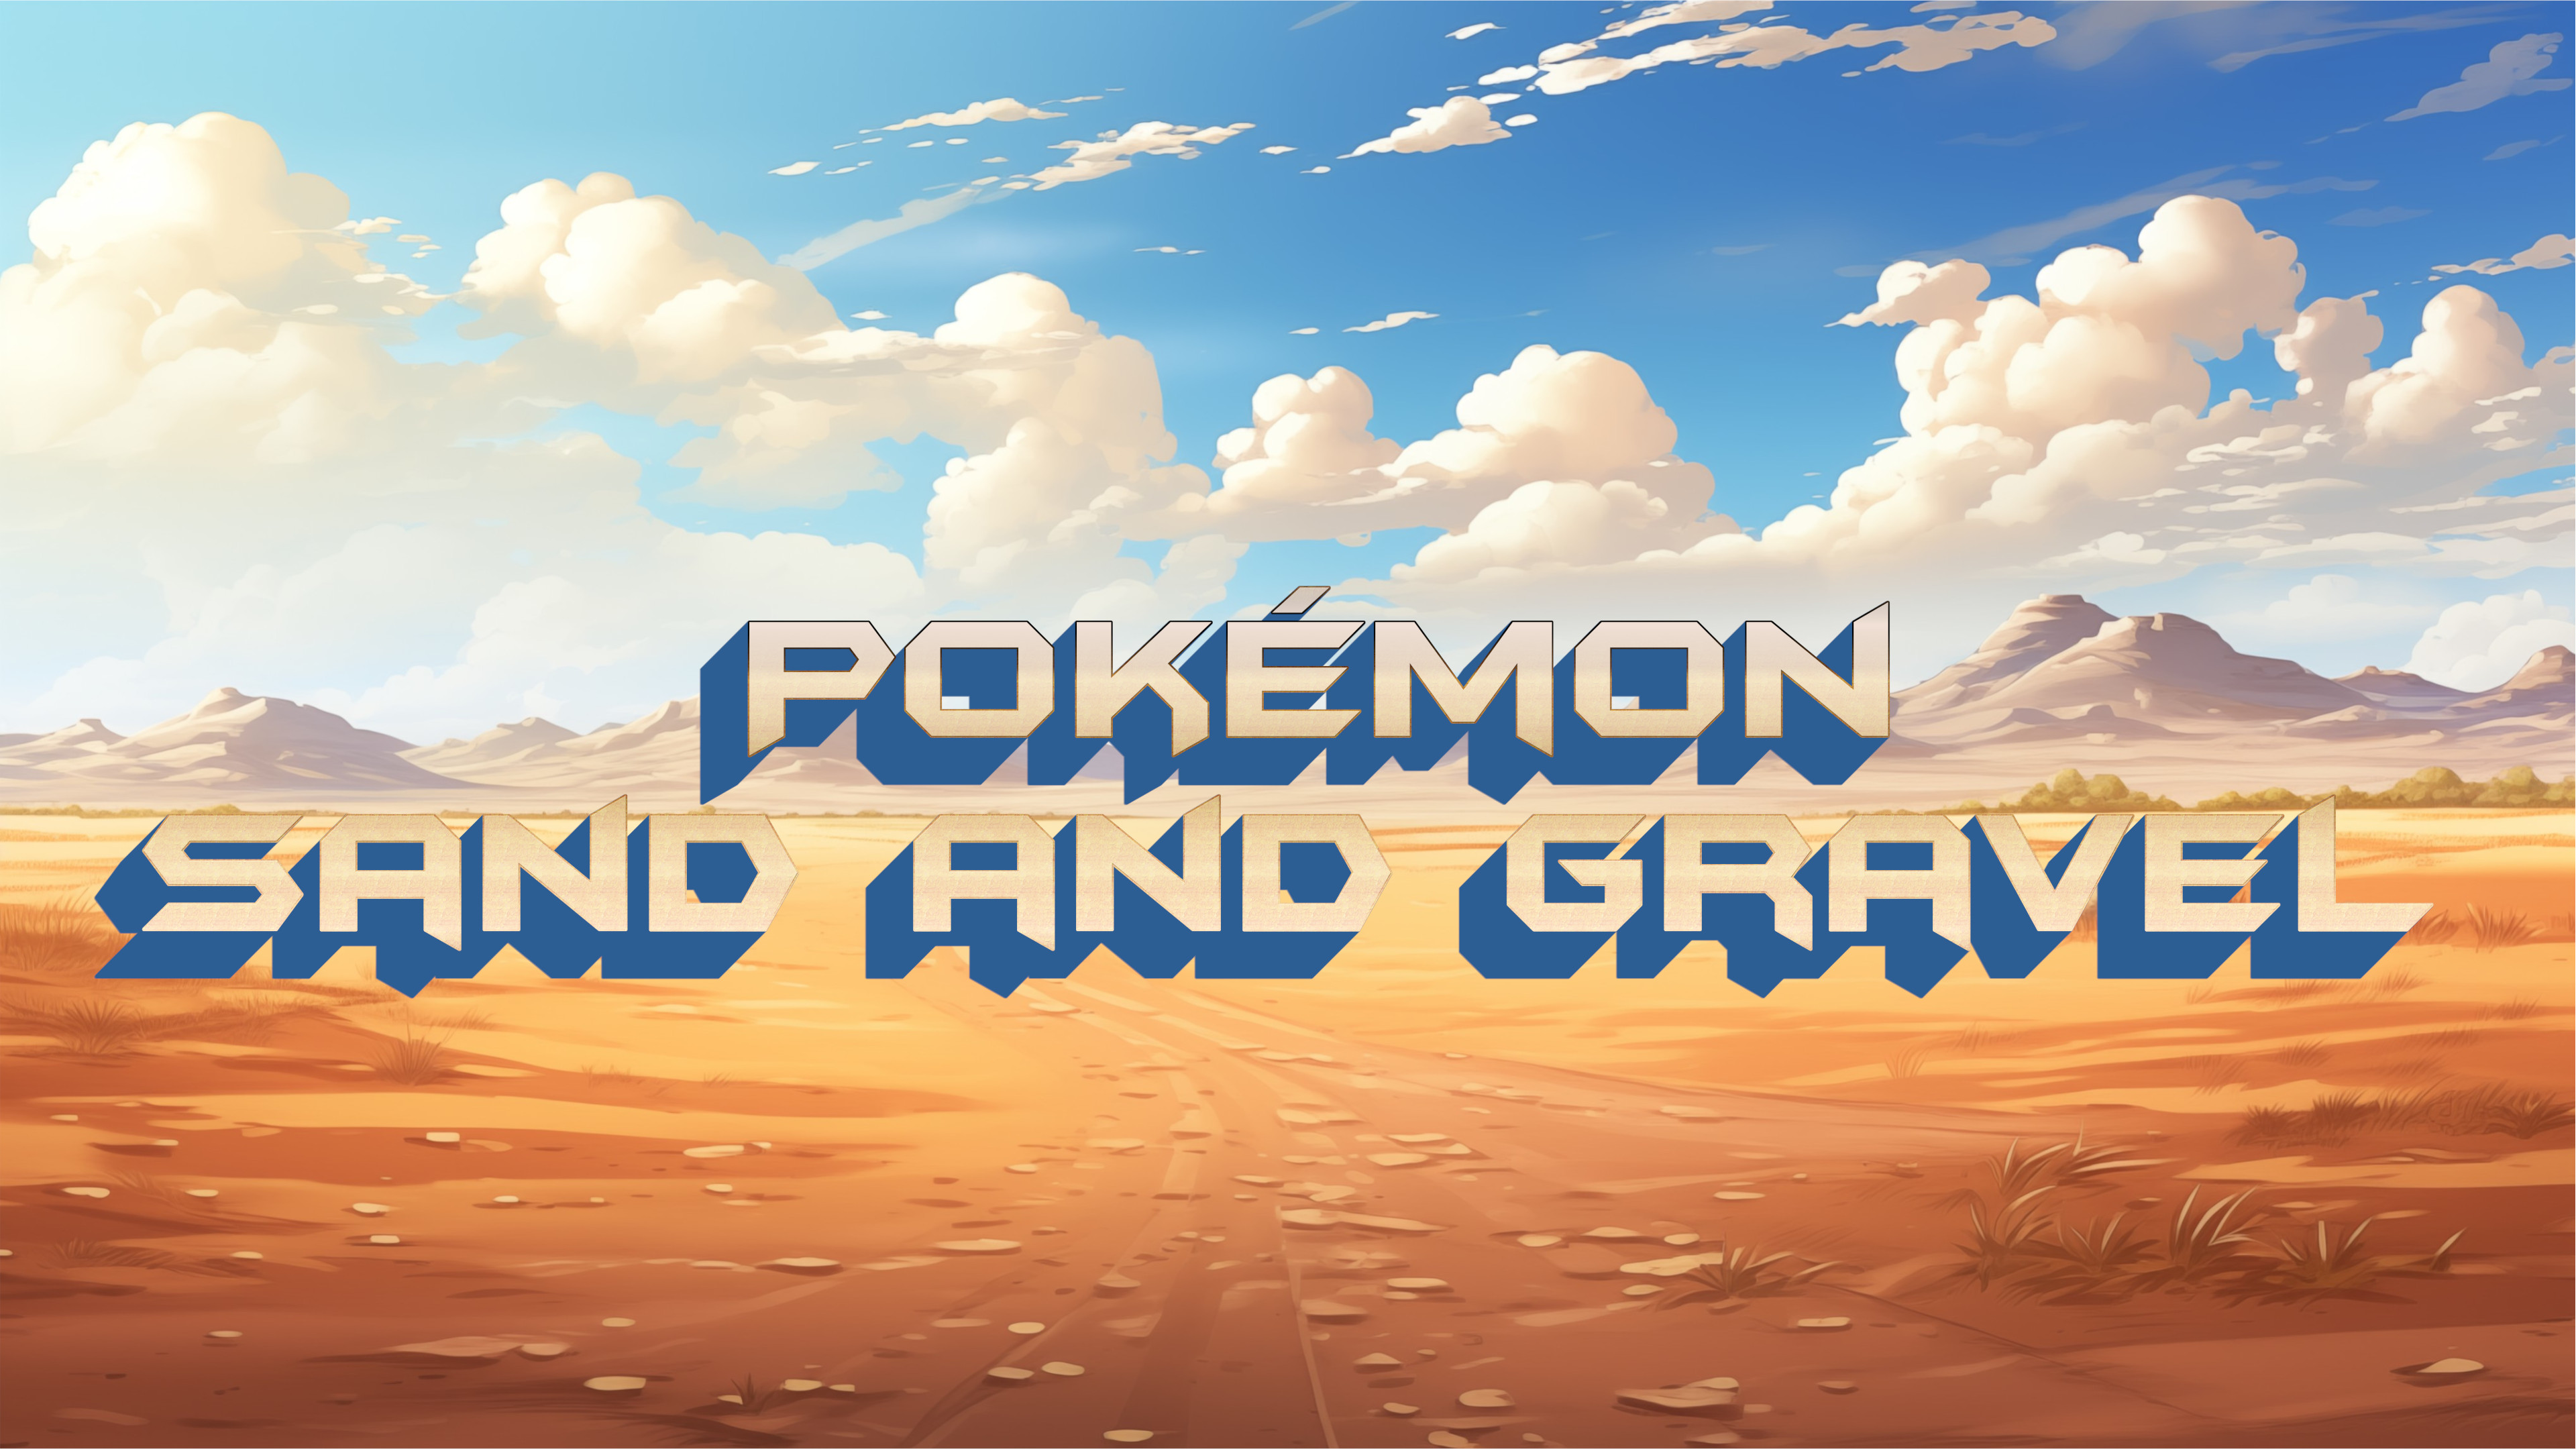 Pokémon Sand and Gravel